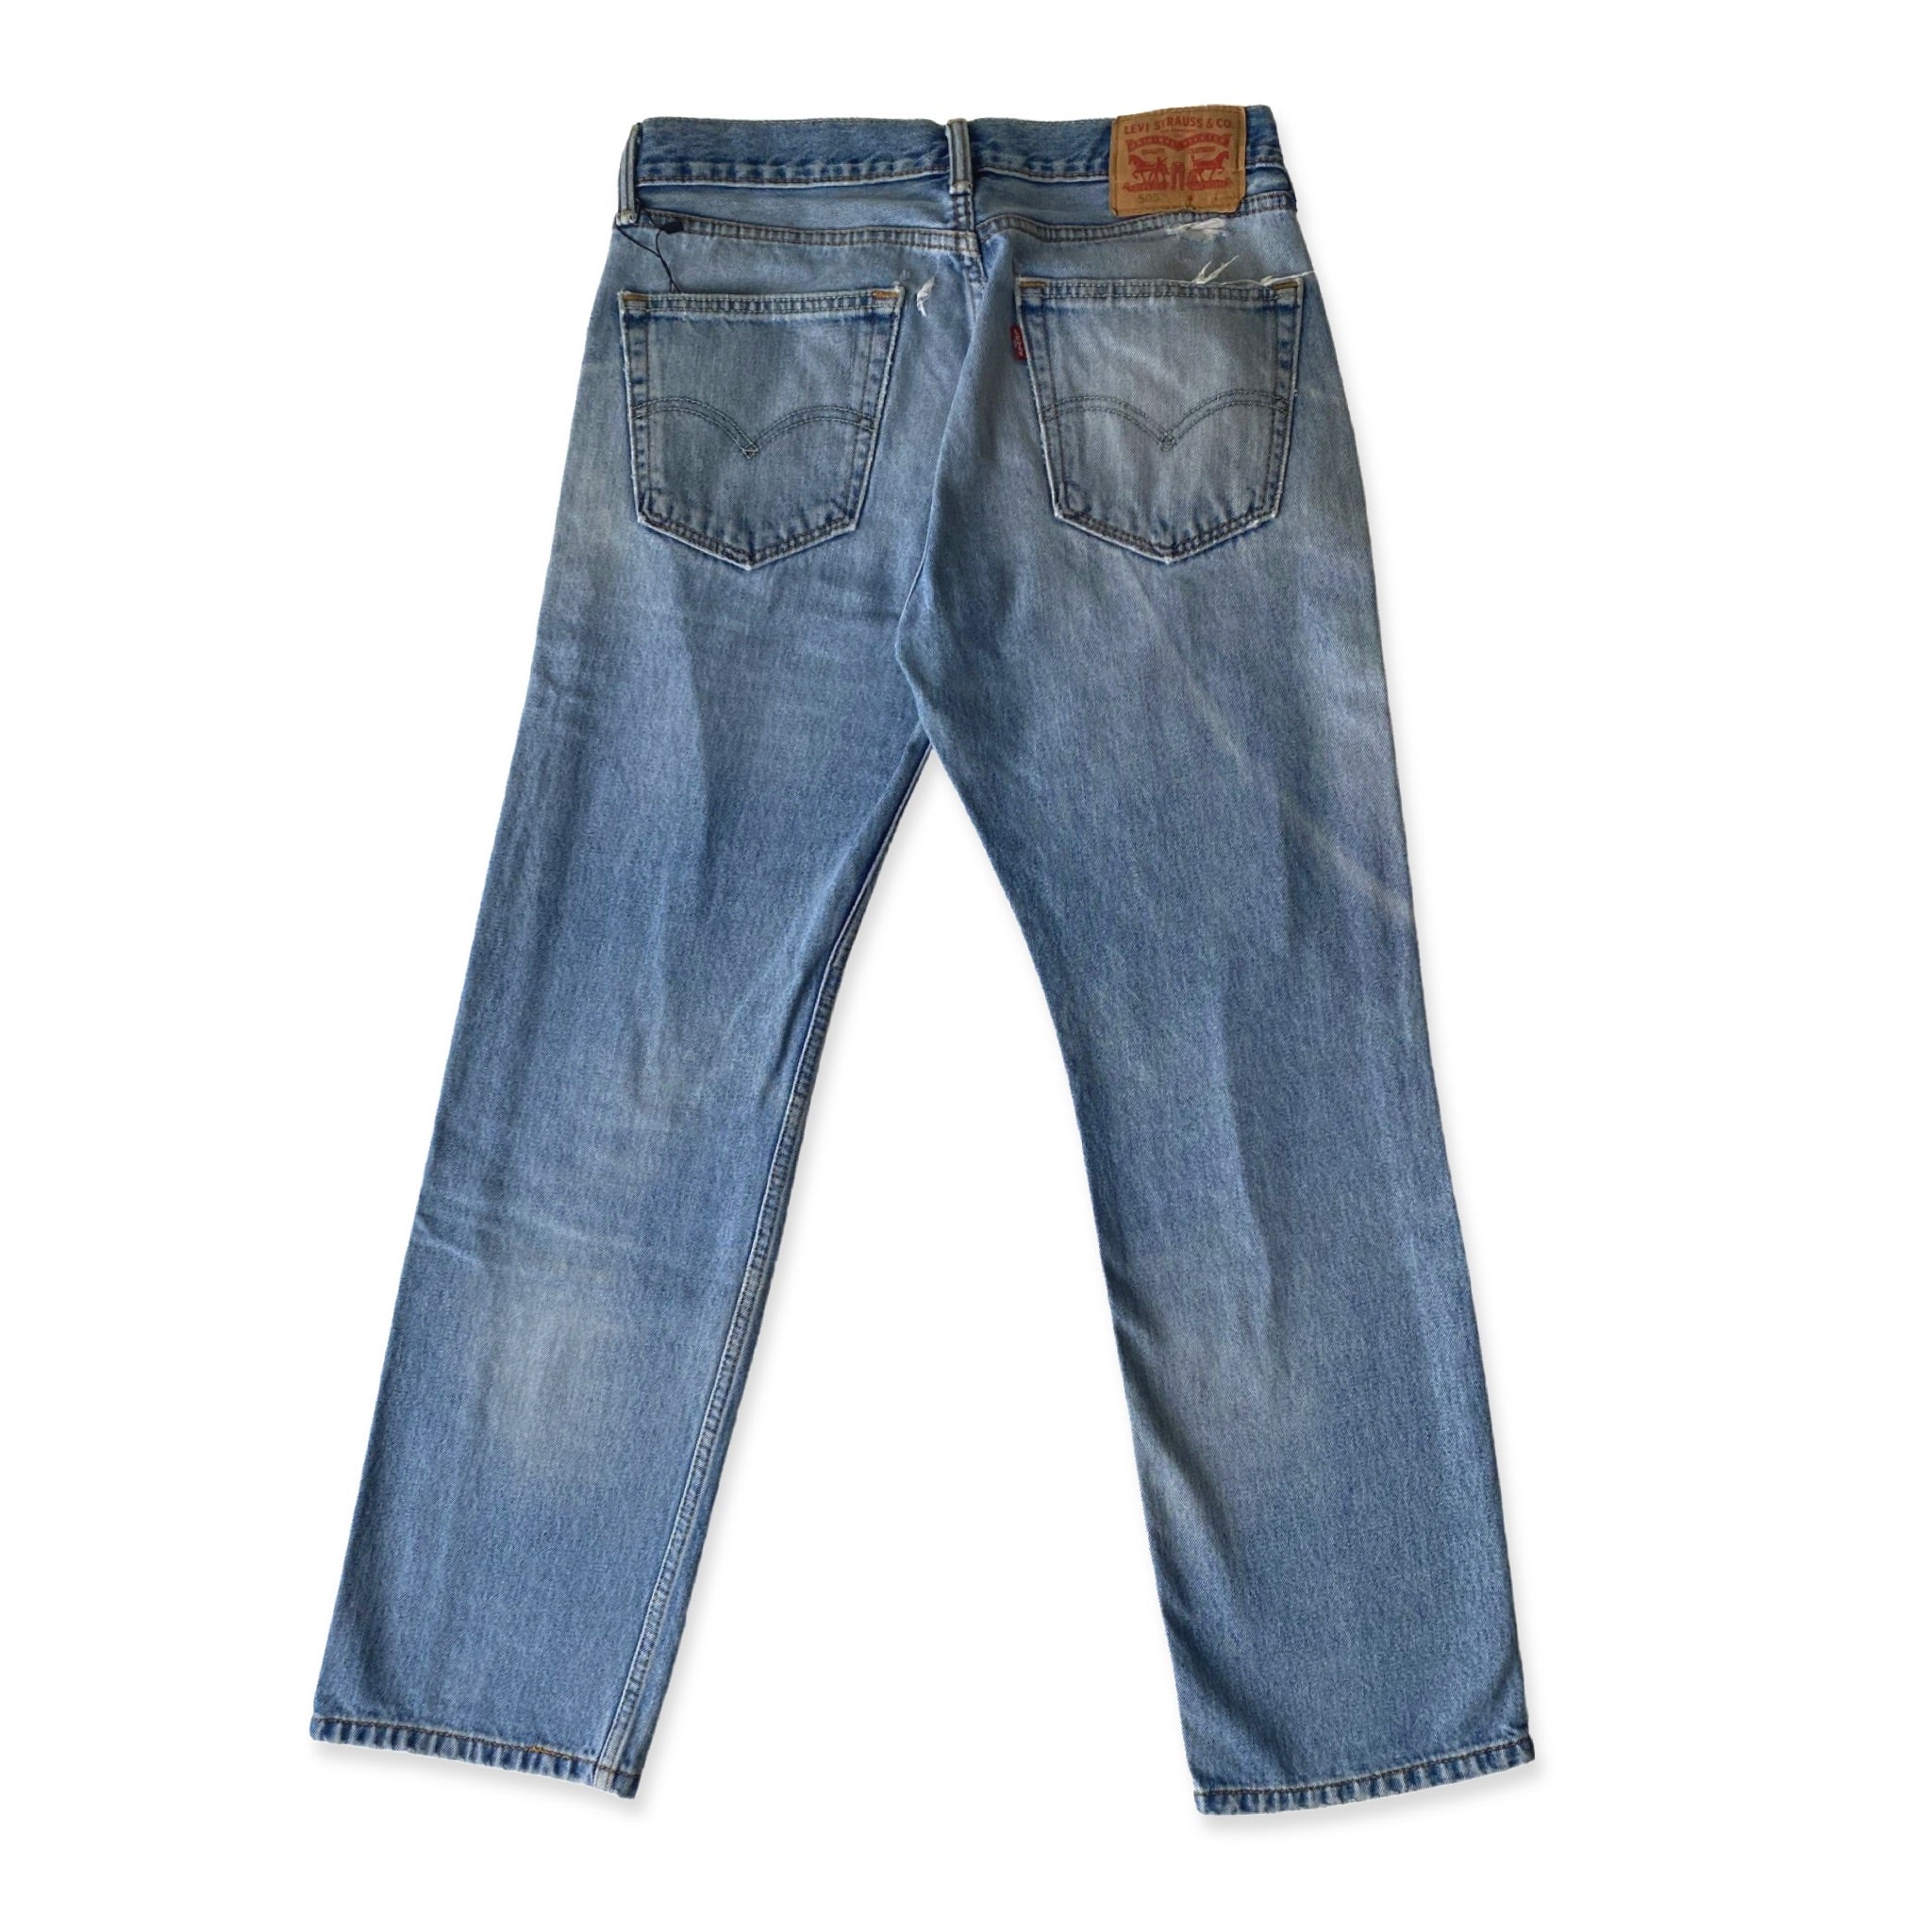 Vintage Levi's 505 Distressed Jeans